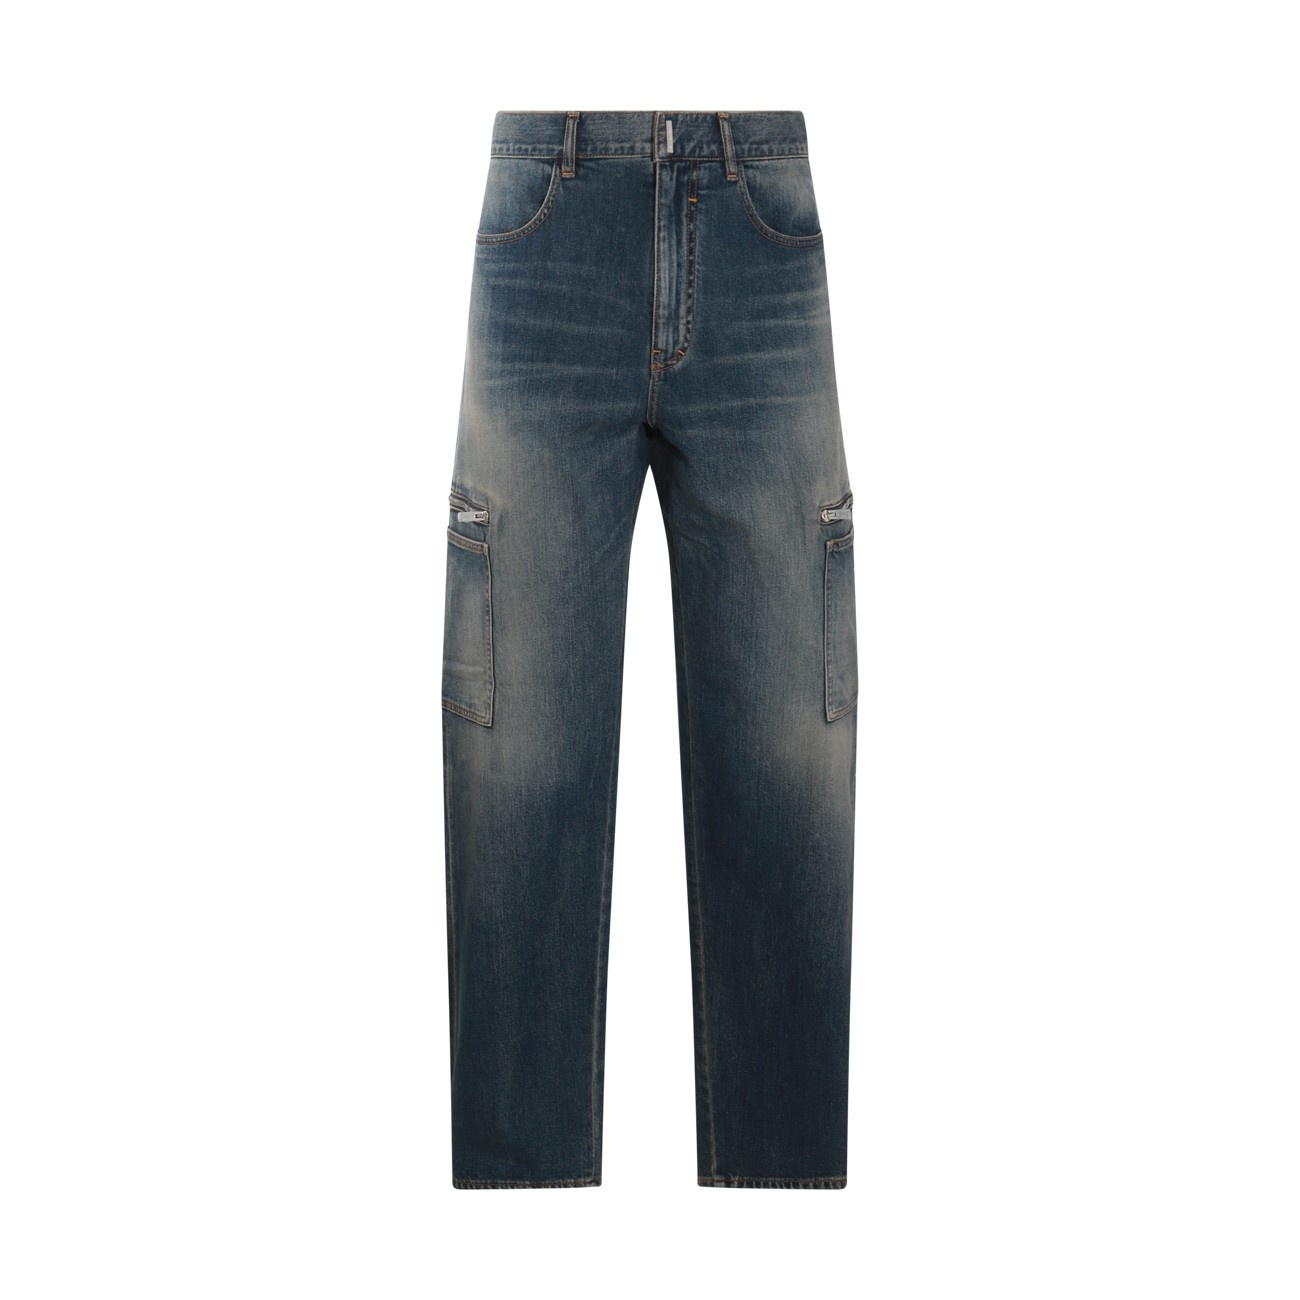 navy cotton jeans - 1